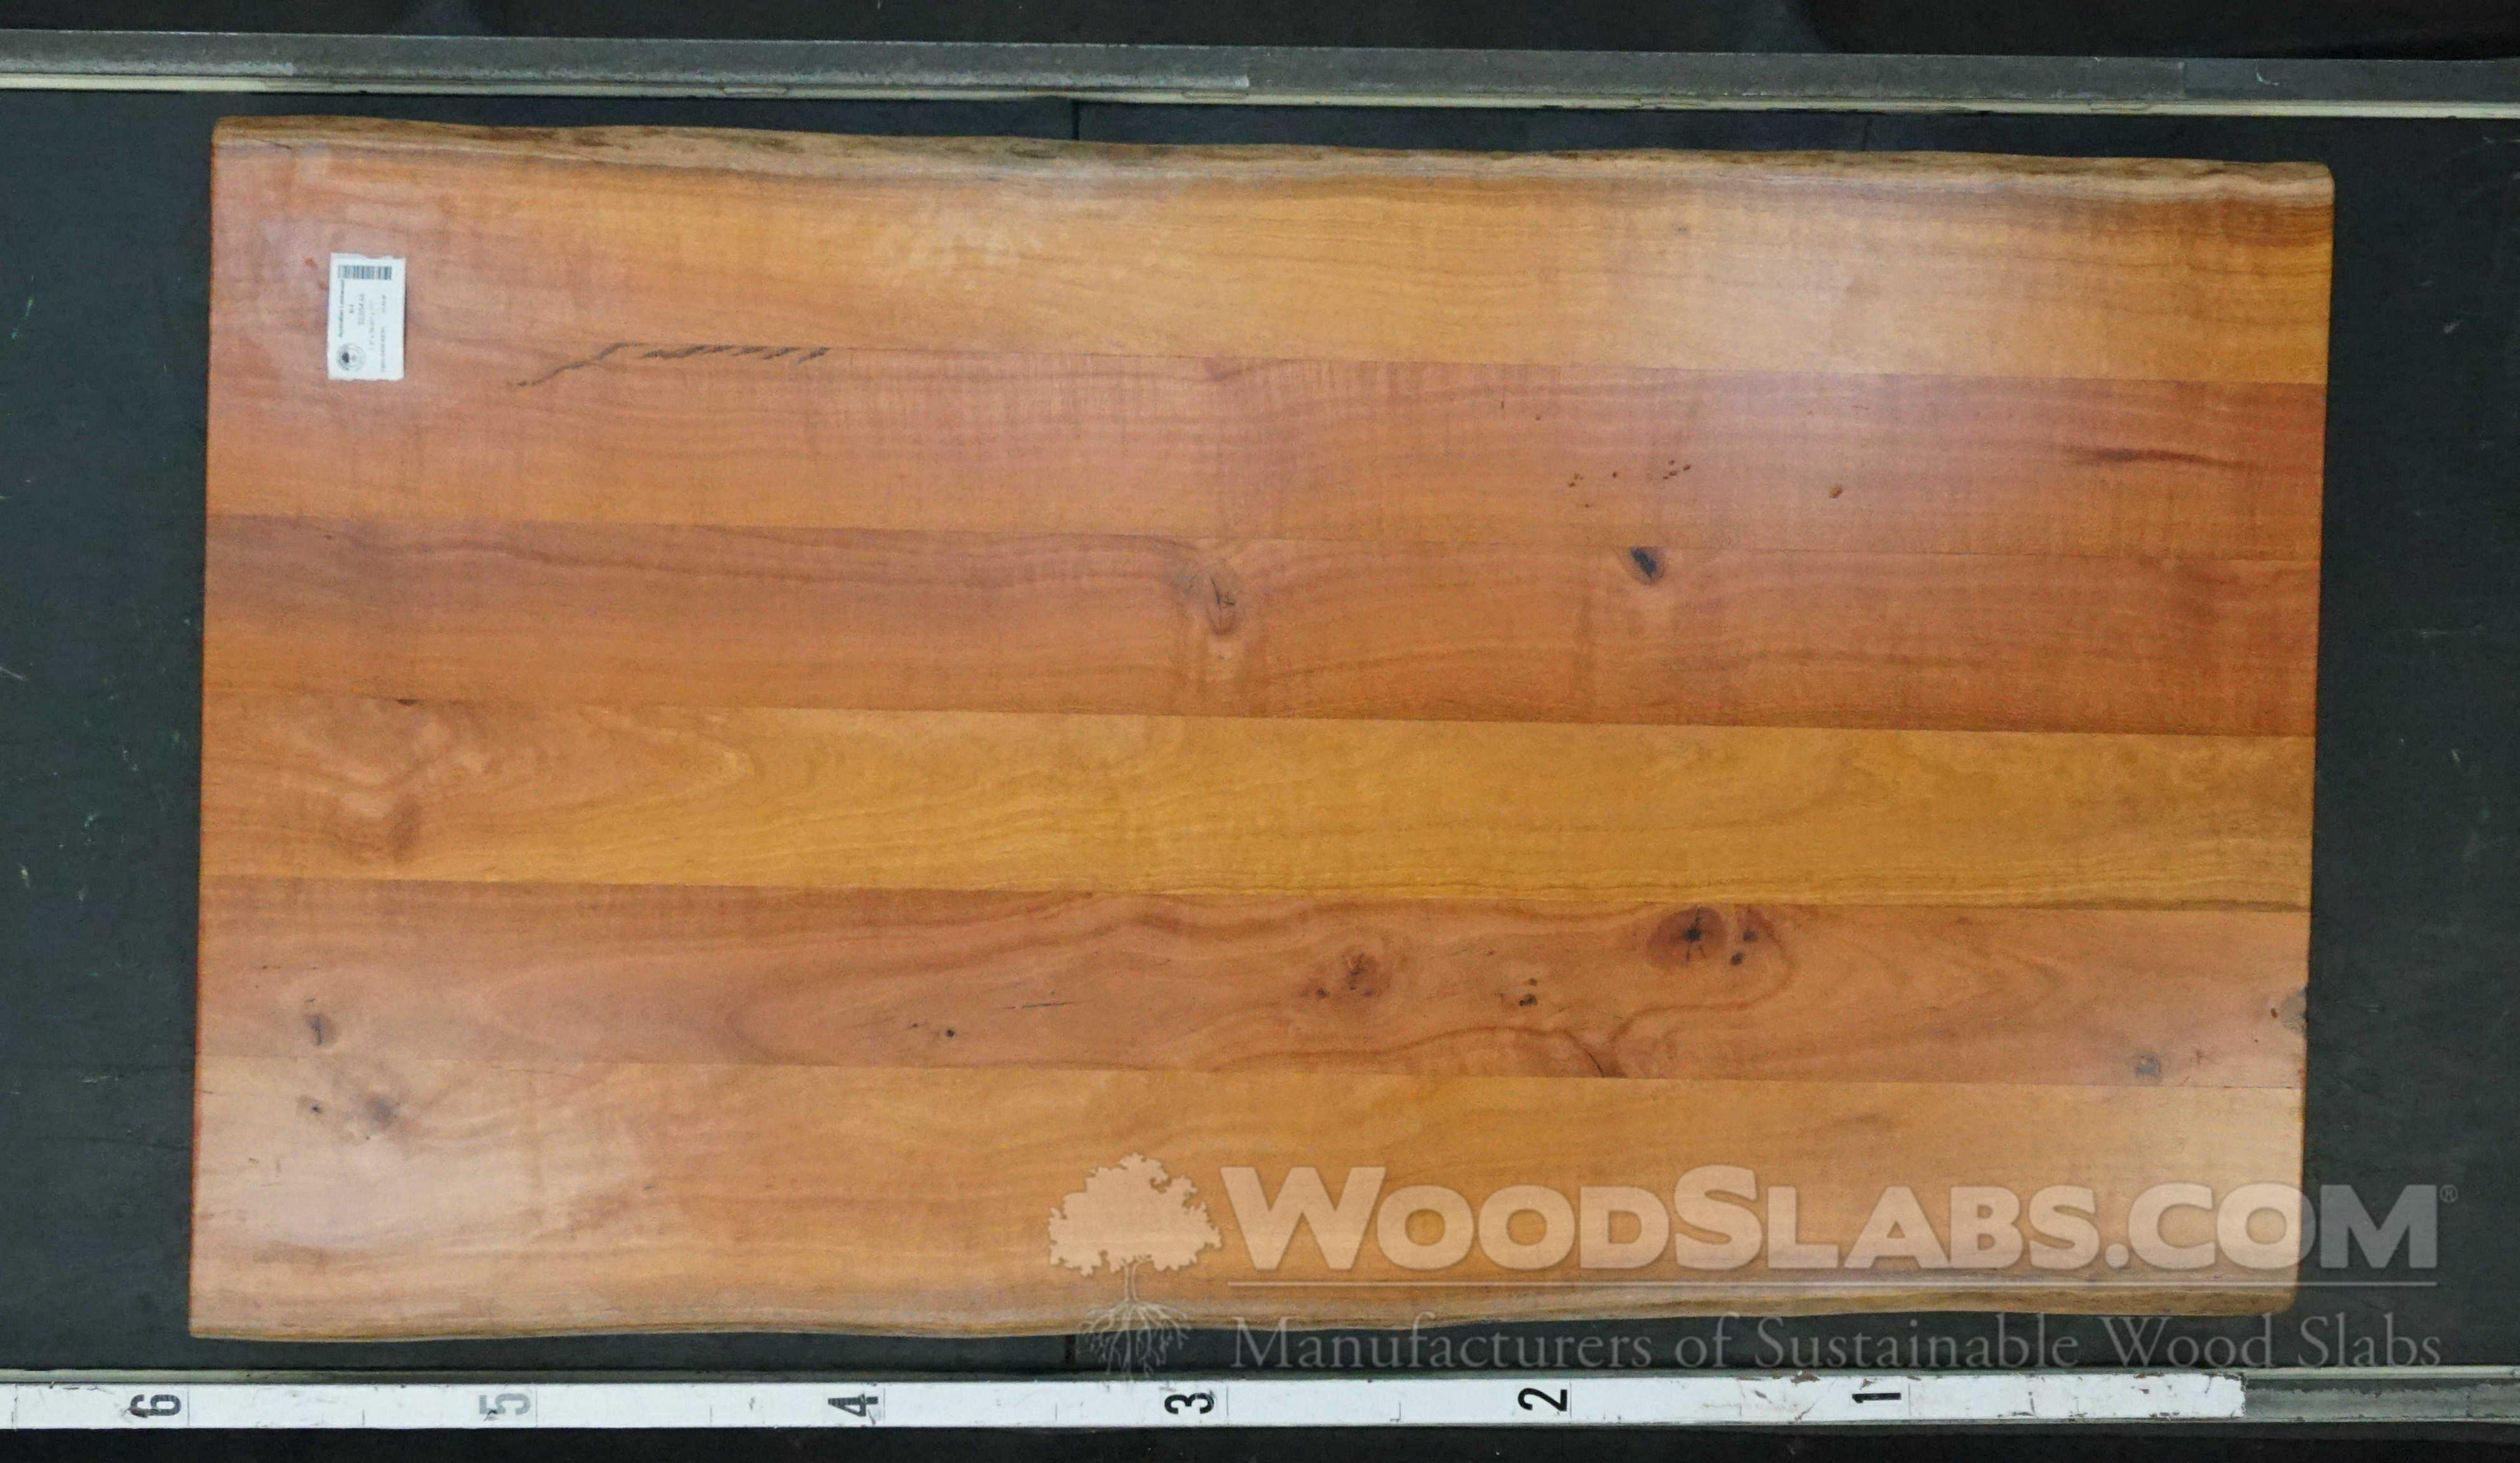 hardwood floor refinishing buffalo ny of woodslabs com australian lacewood regarding australian lacewood wood slab fwh 04w kioh